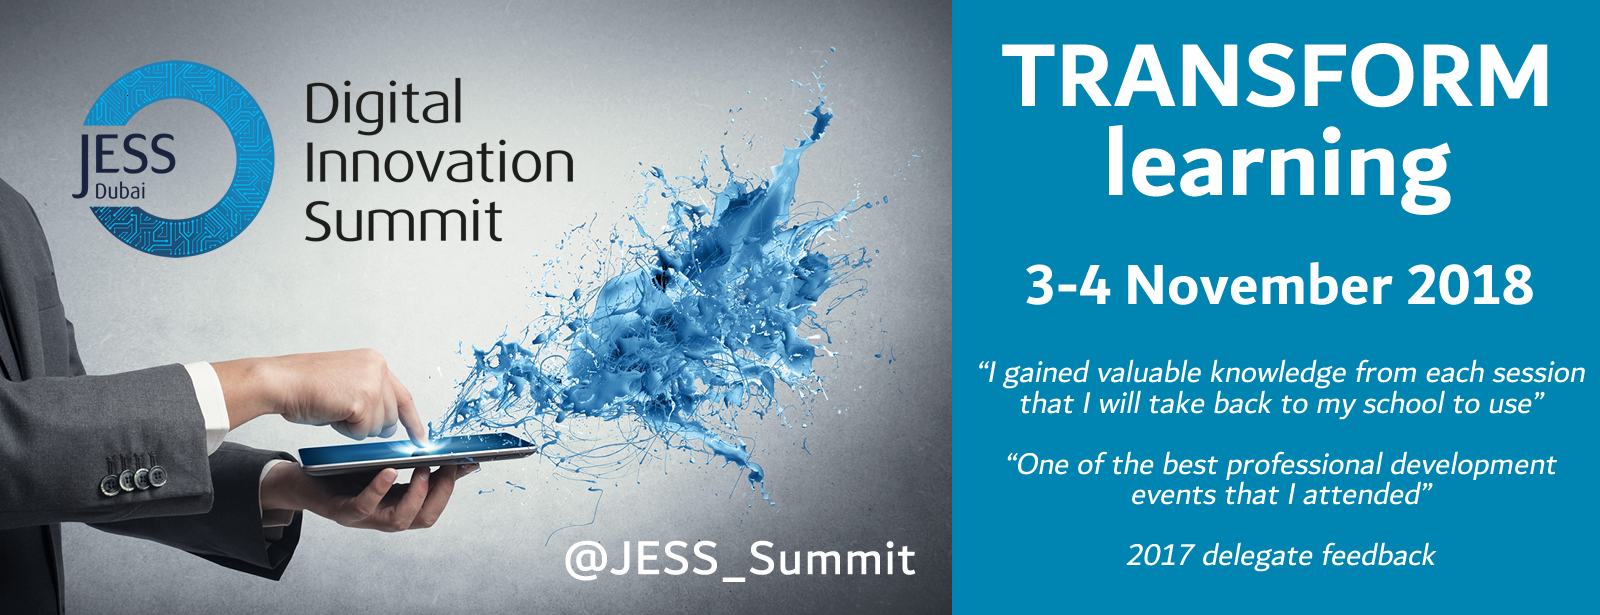 JESS Digital Innovation Summit 2018 - Coming Soon in UAE